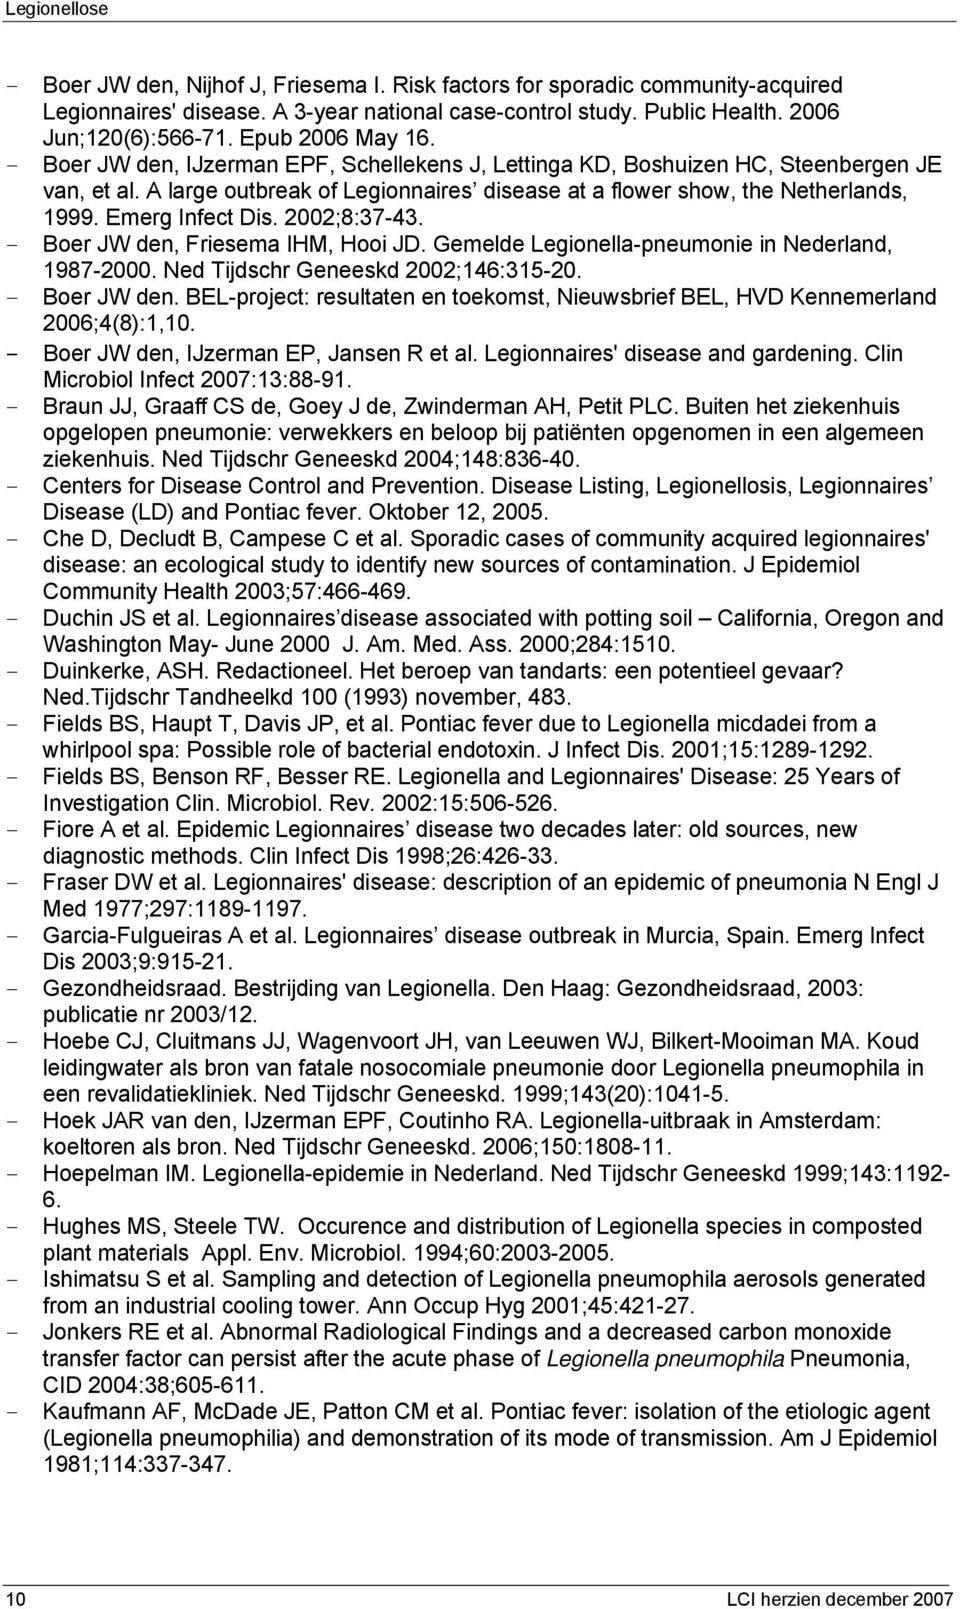 2002;8:37-43. - Boer JW den, Friesema IHM, Hooi JD. Gemelde Legionella-pneumonie in Nederland, 1987-2000. Ned Tijdschr Geneeskd 2002;146:315-20. - Boer JW den. BEL-project: resultaten en toekomst, Nieuwsbrief BEL, HVD Kennemerland 2006;4(8):1,10.